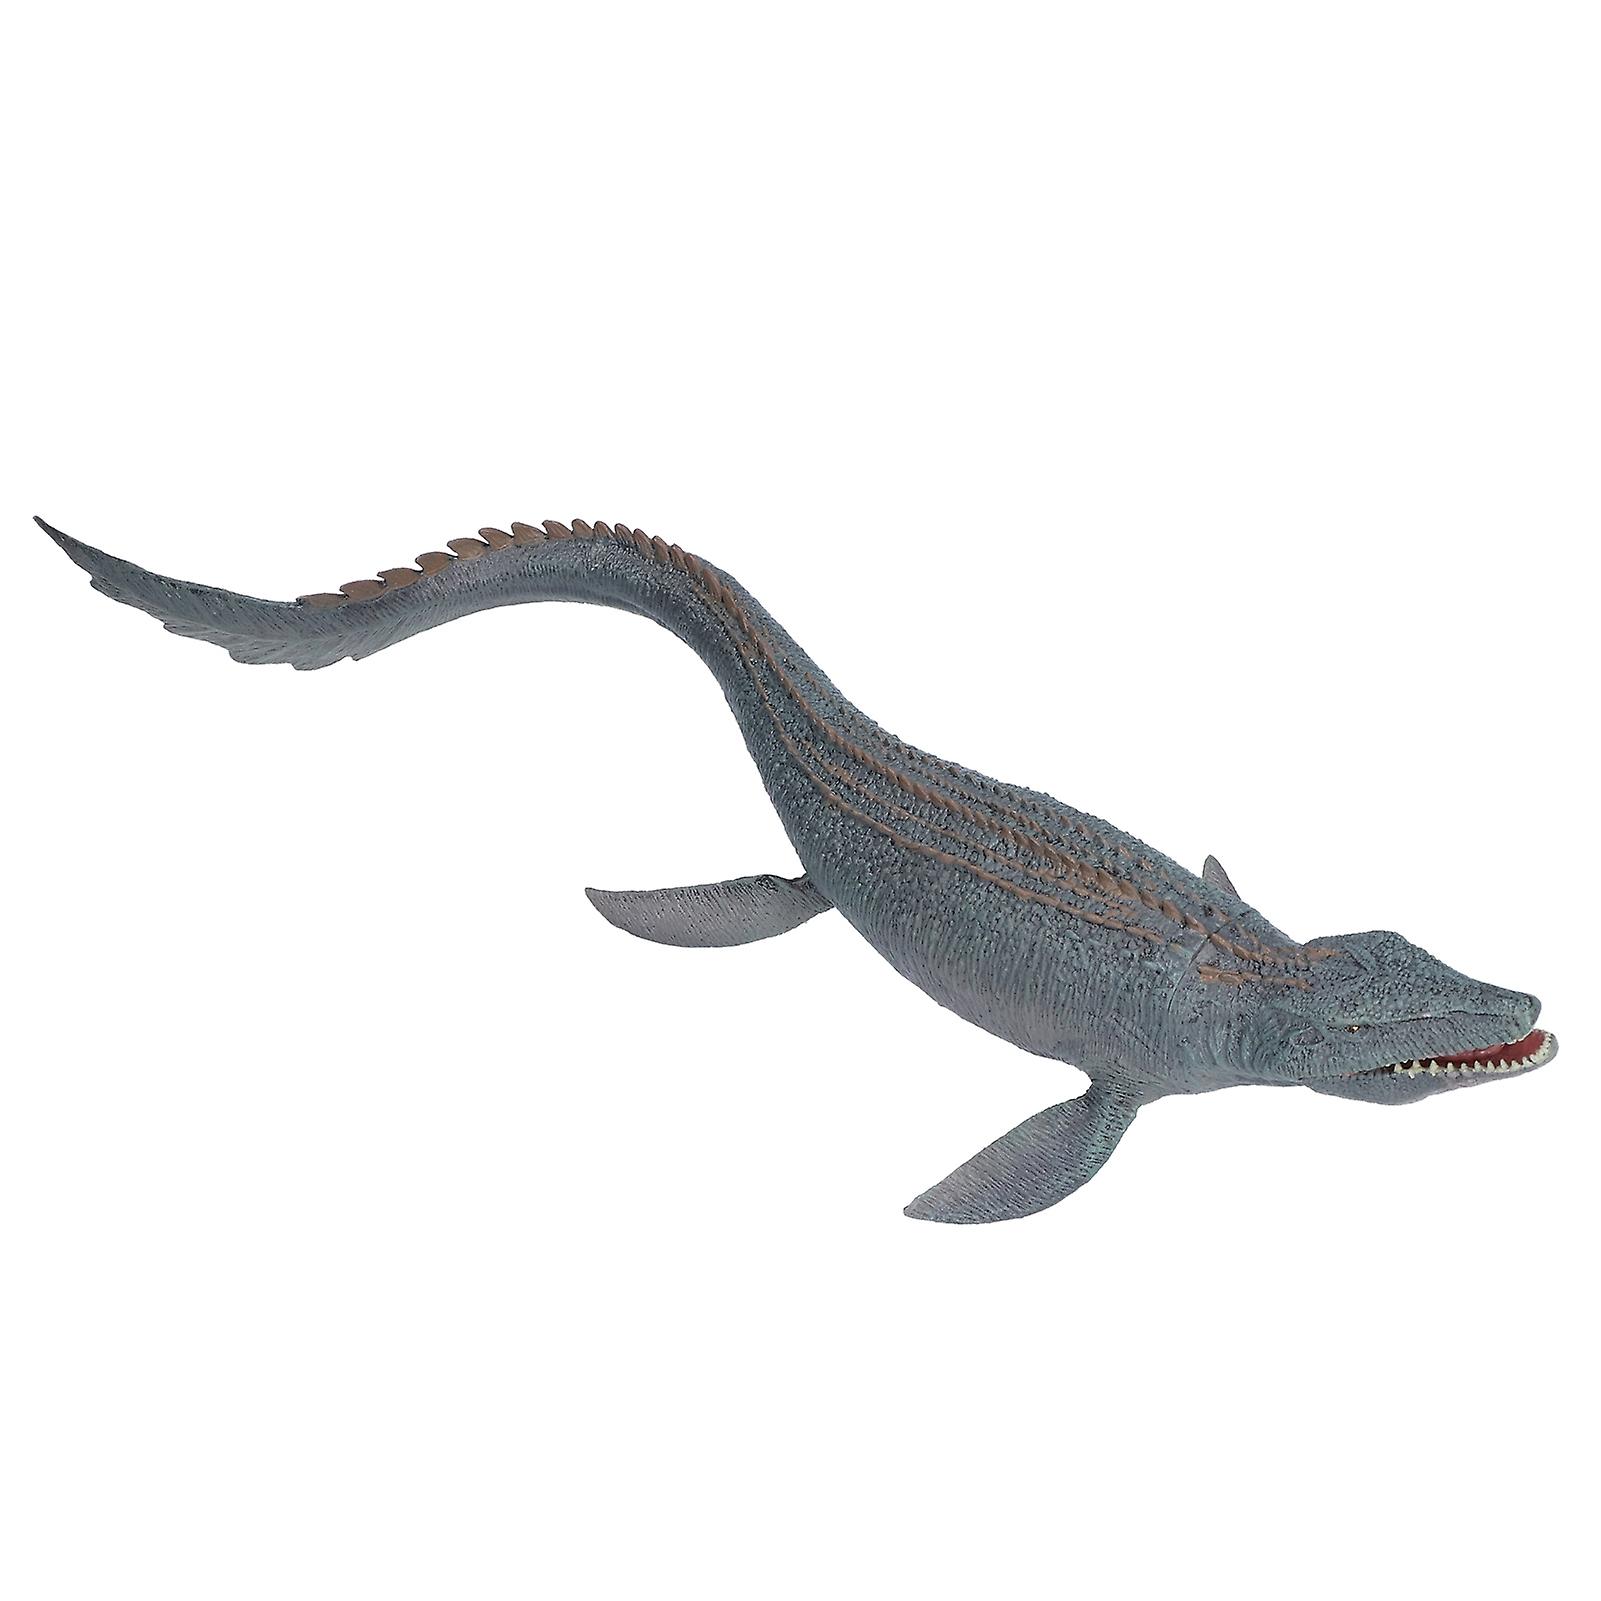 Lifelike Dinosaur Figure Toys High Simulation Dinosaur Model Decoration For Childrenmosasaur